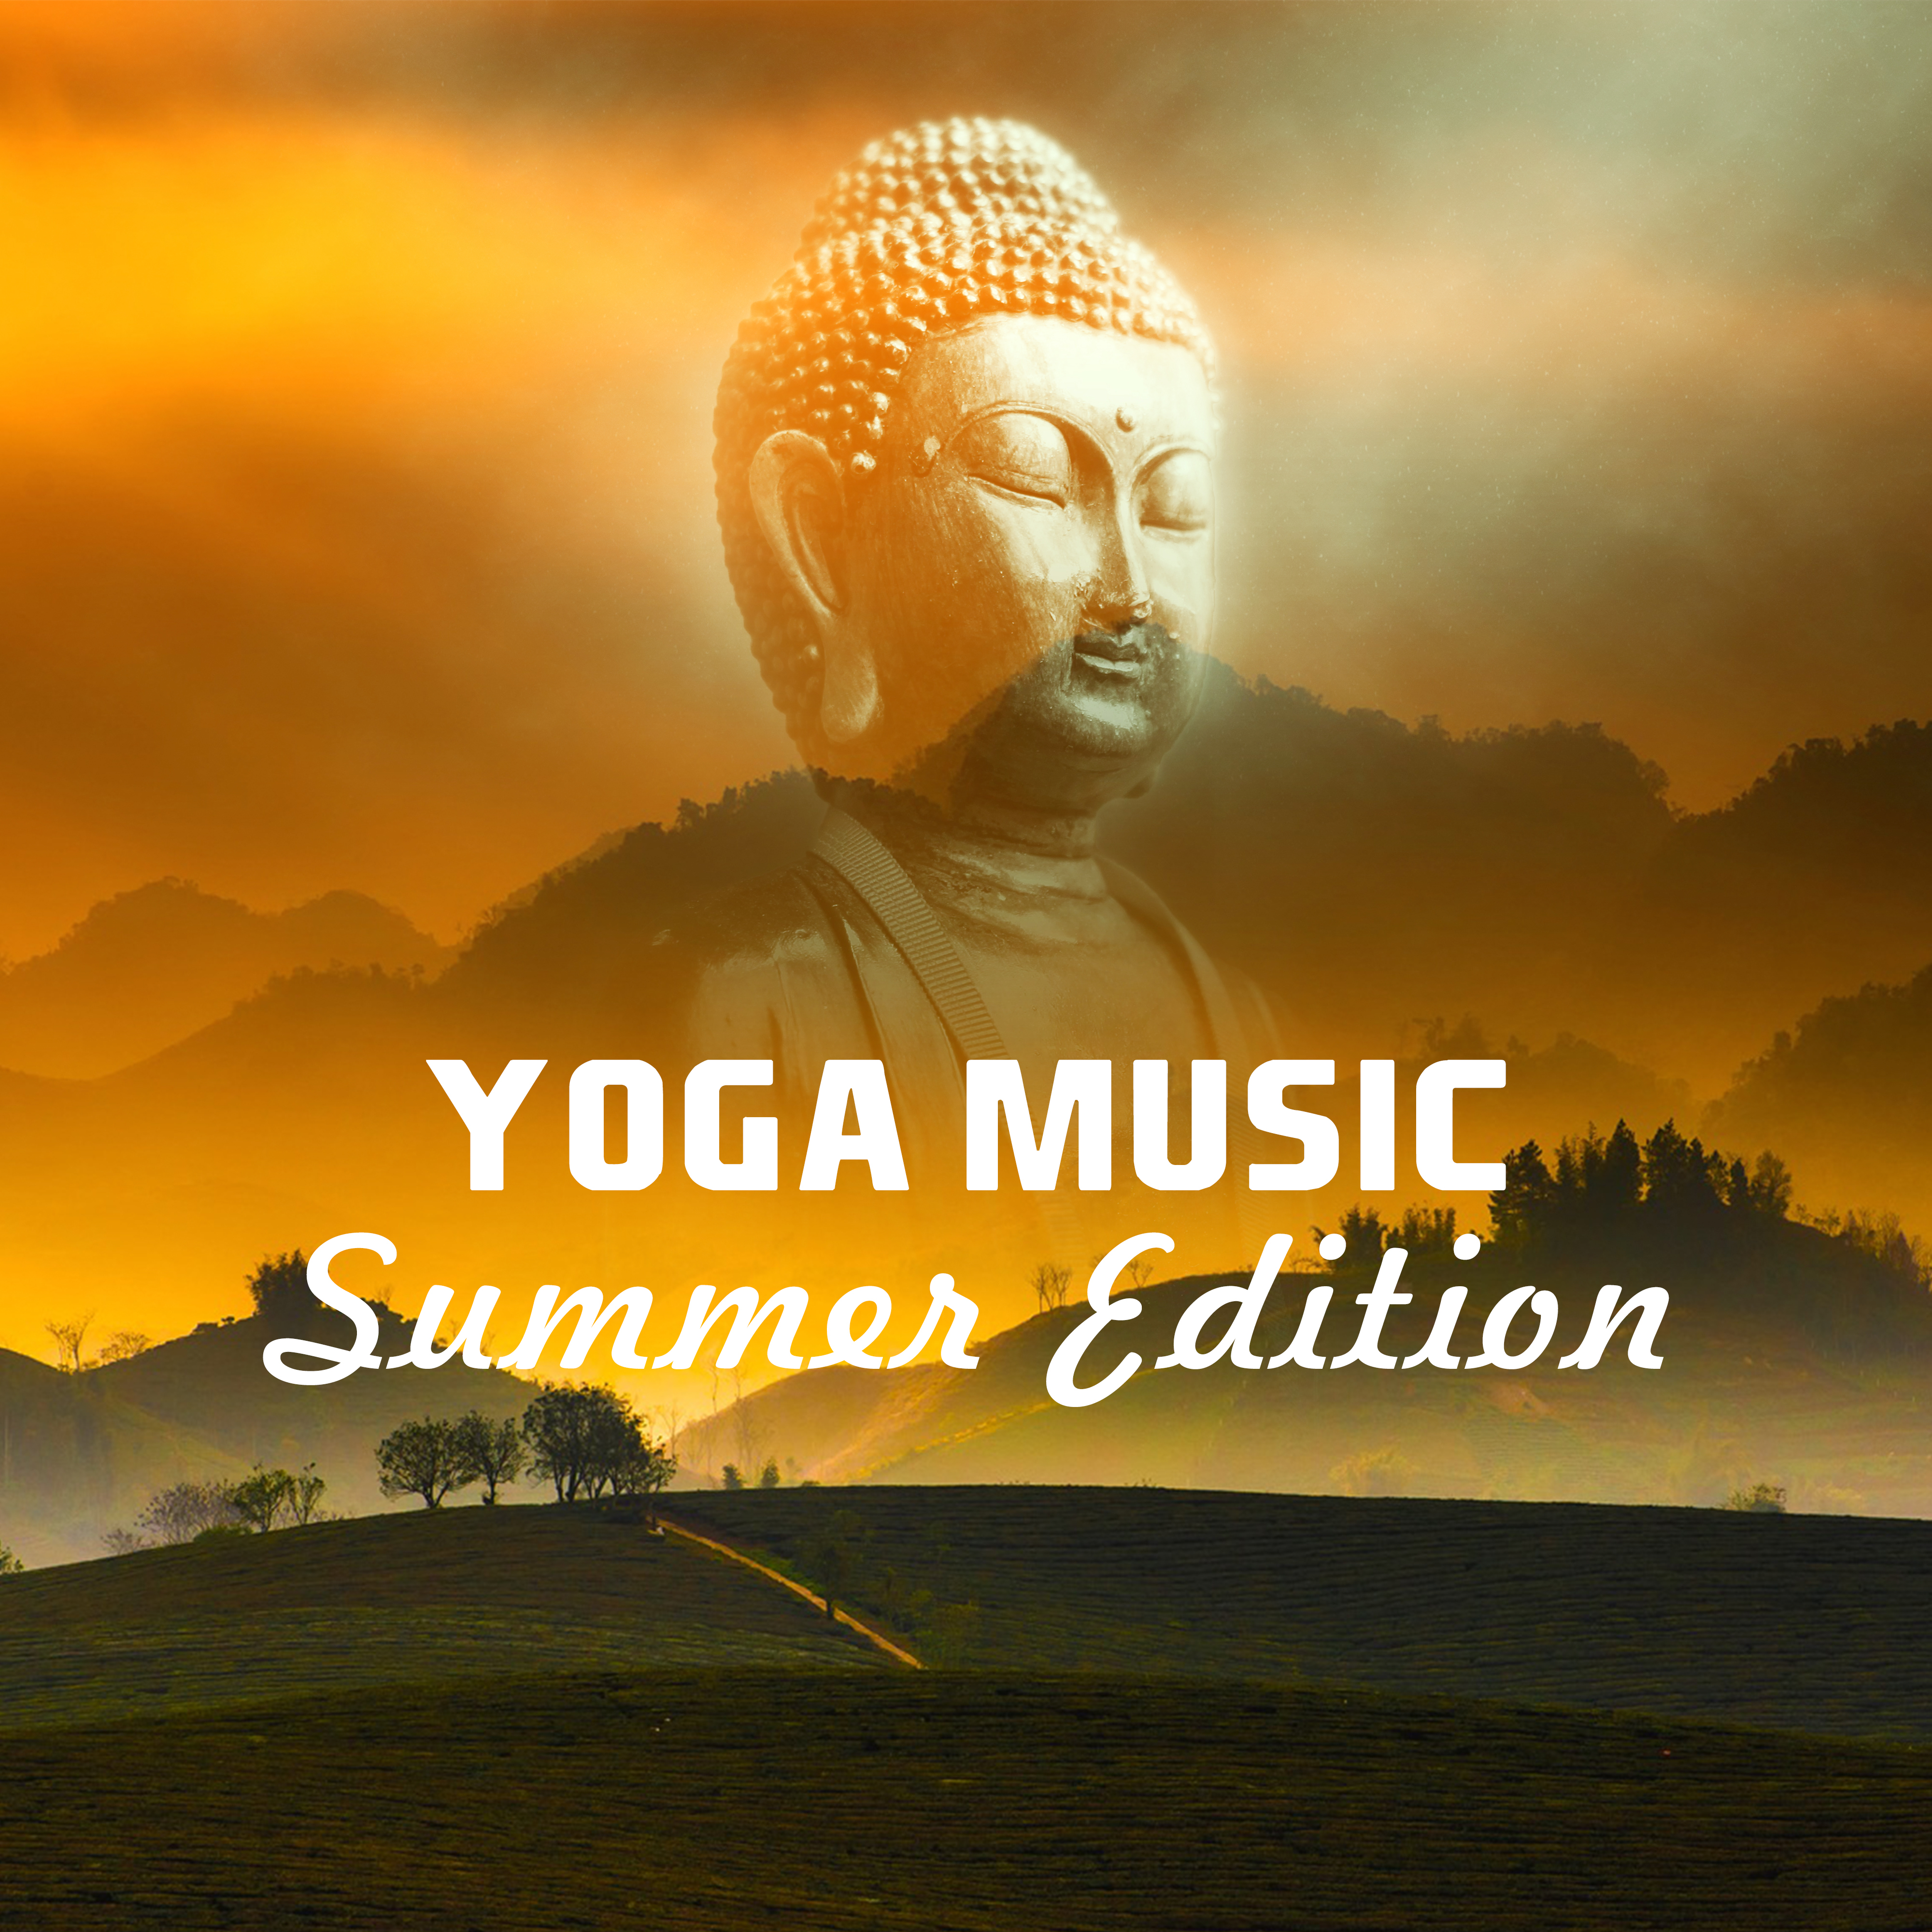 Yoga Music Summer Edition – Relaxation & Meditation, Yoga Music, Zen, Healing Nature Music